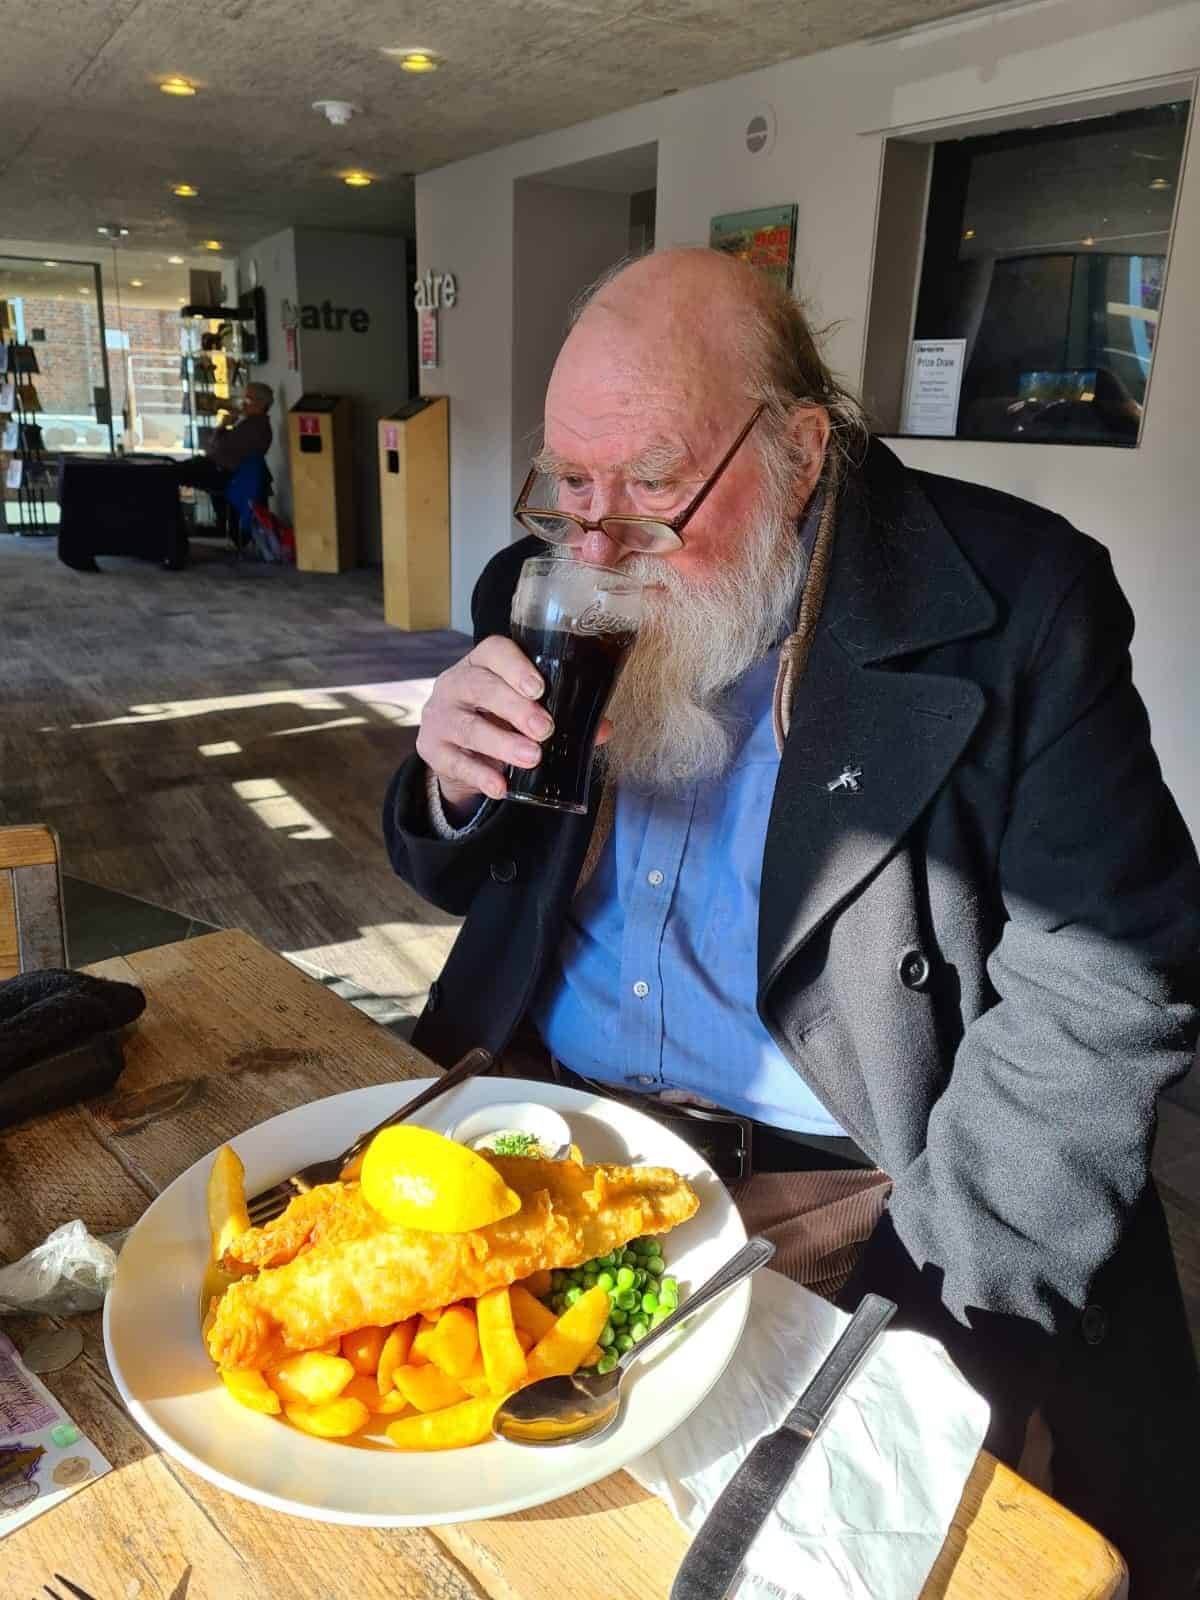 An elderly gentleman enjoying a pint and a hearty meal at a cozy restaurant.